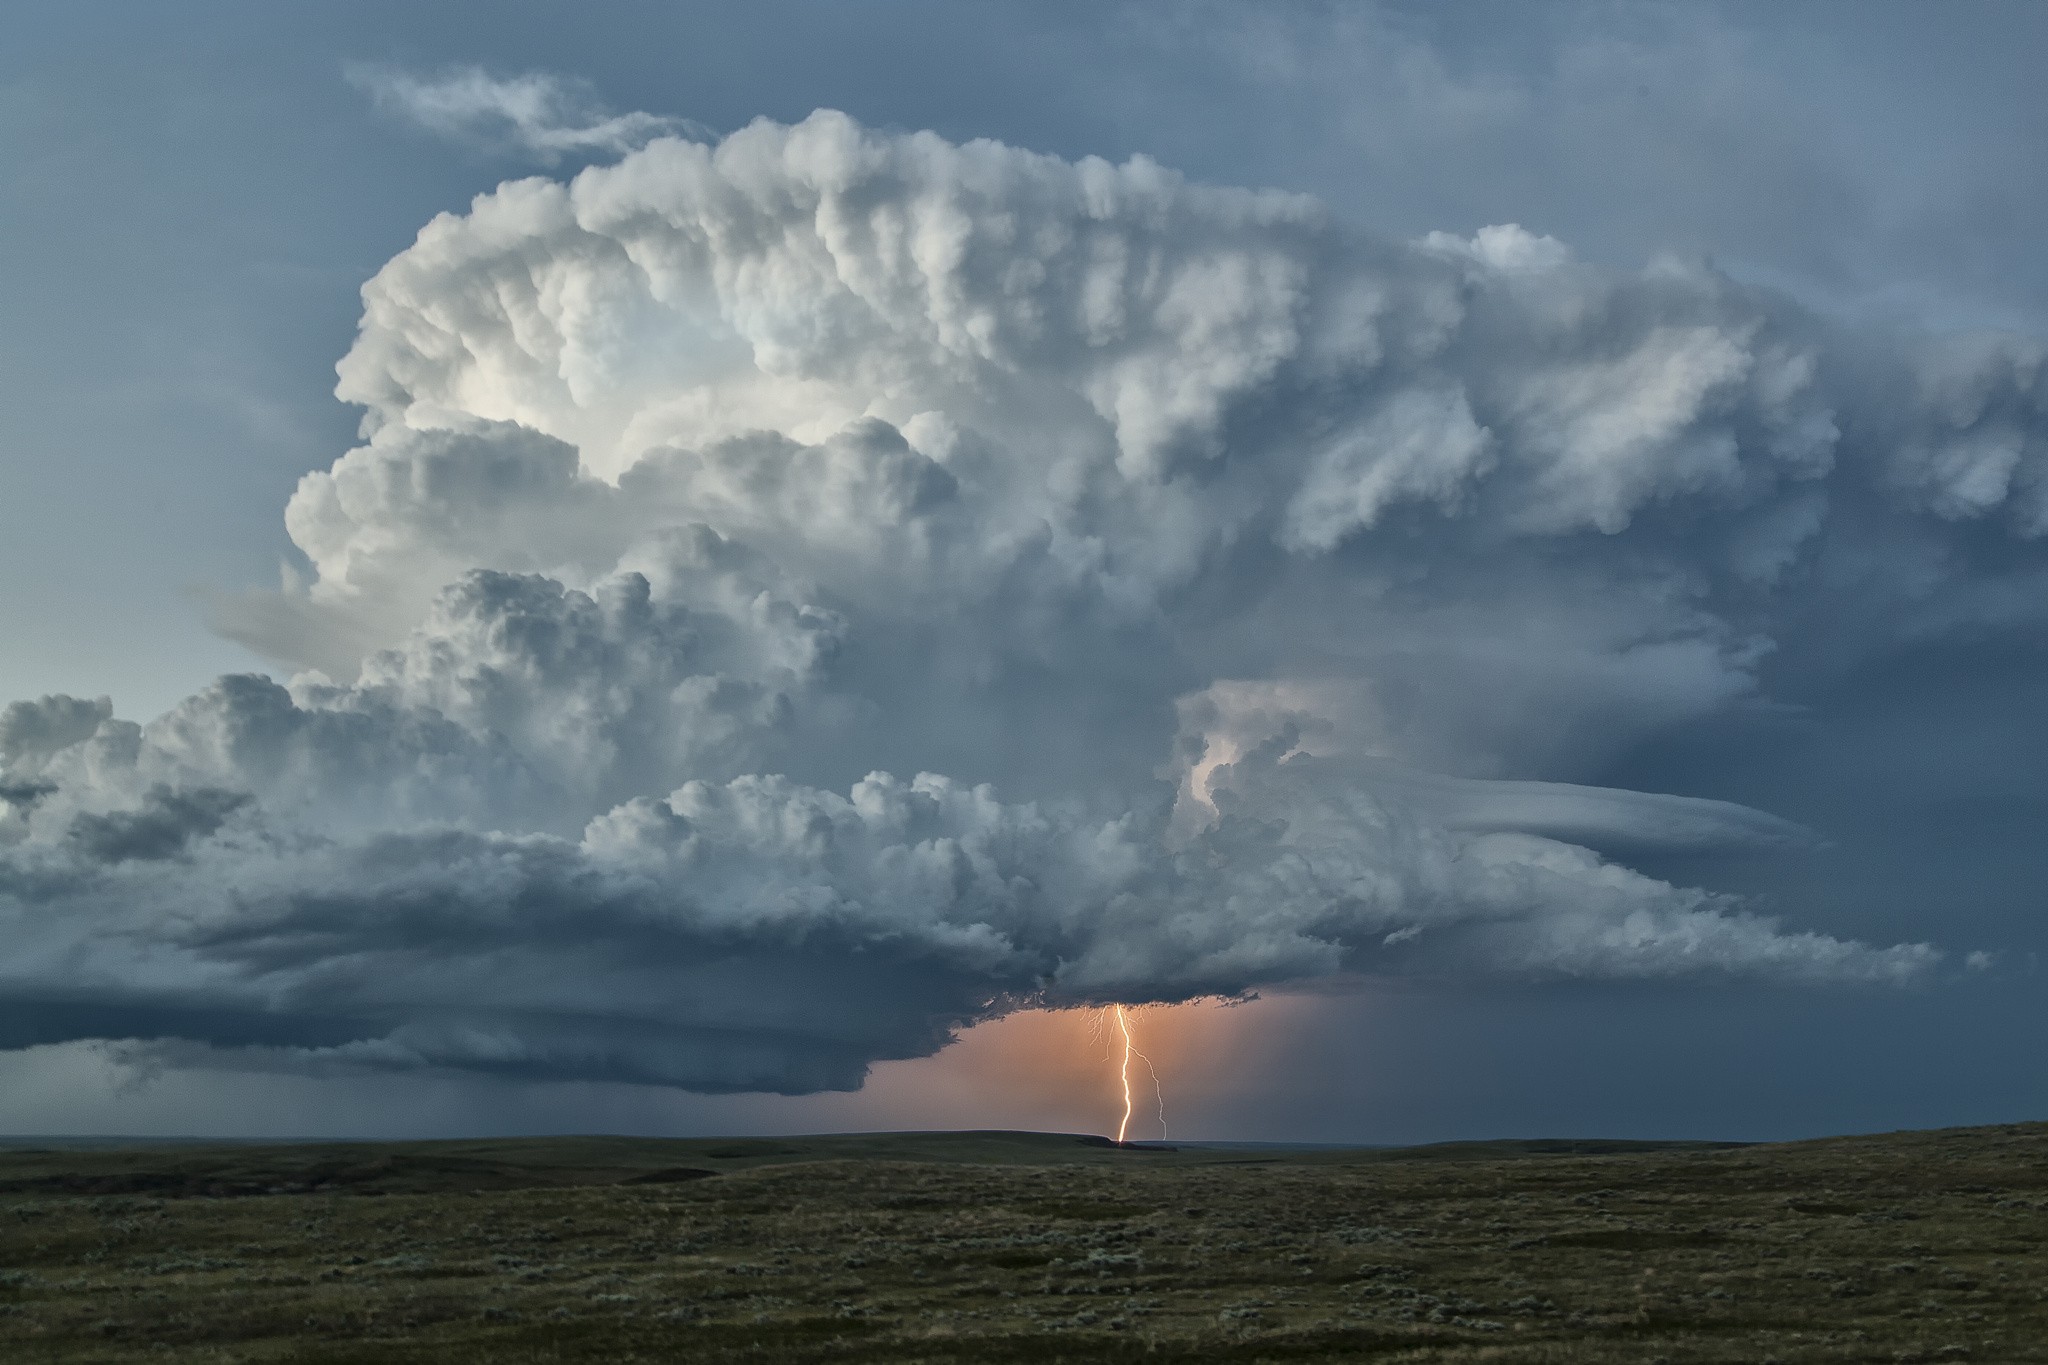 General 2048x1365 nature landscape clouds lightning storm sky field plains